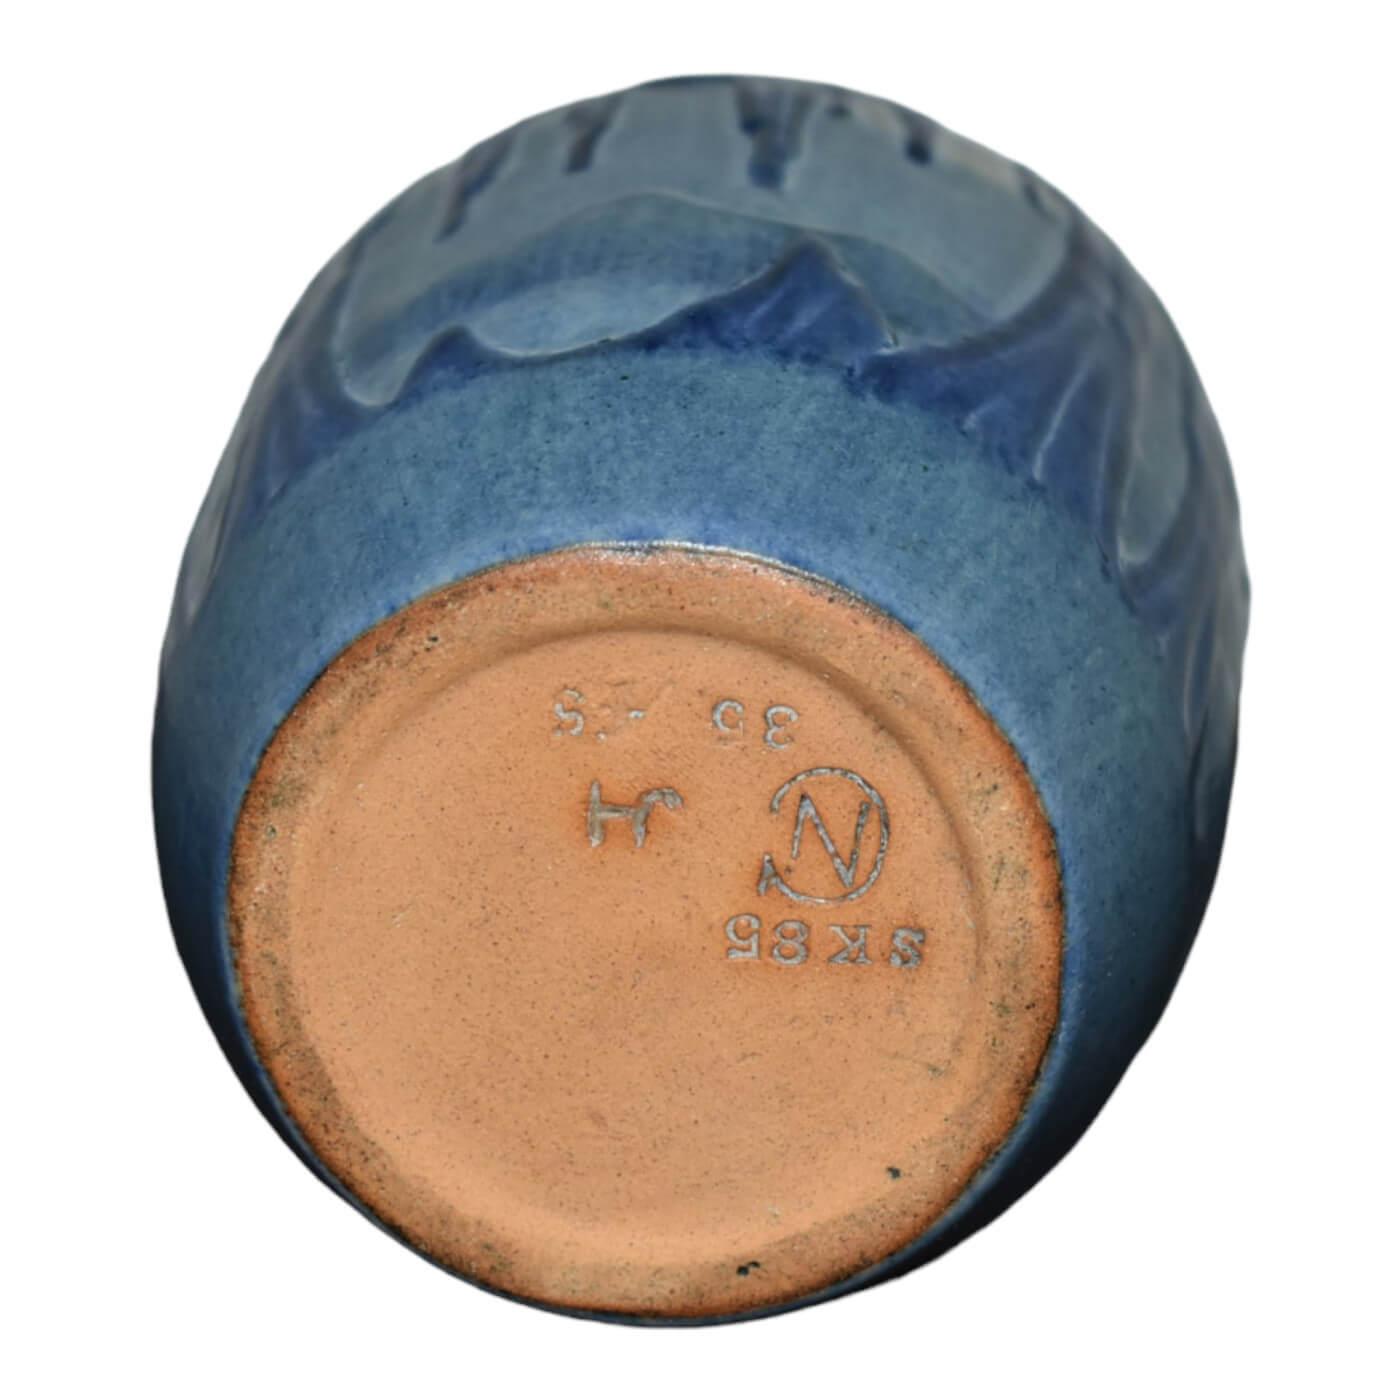 1930 Newcomb Pottery Mark